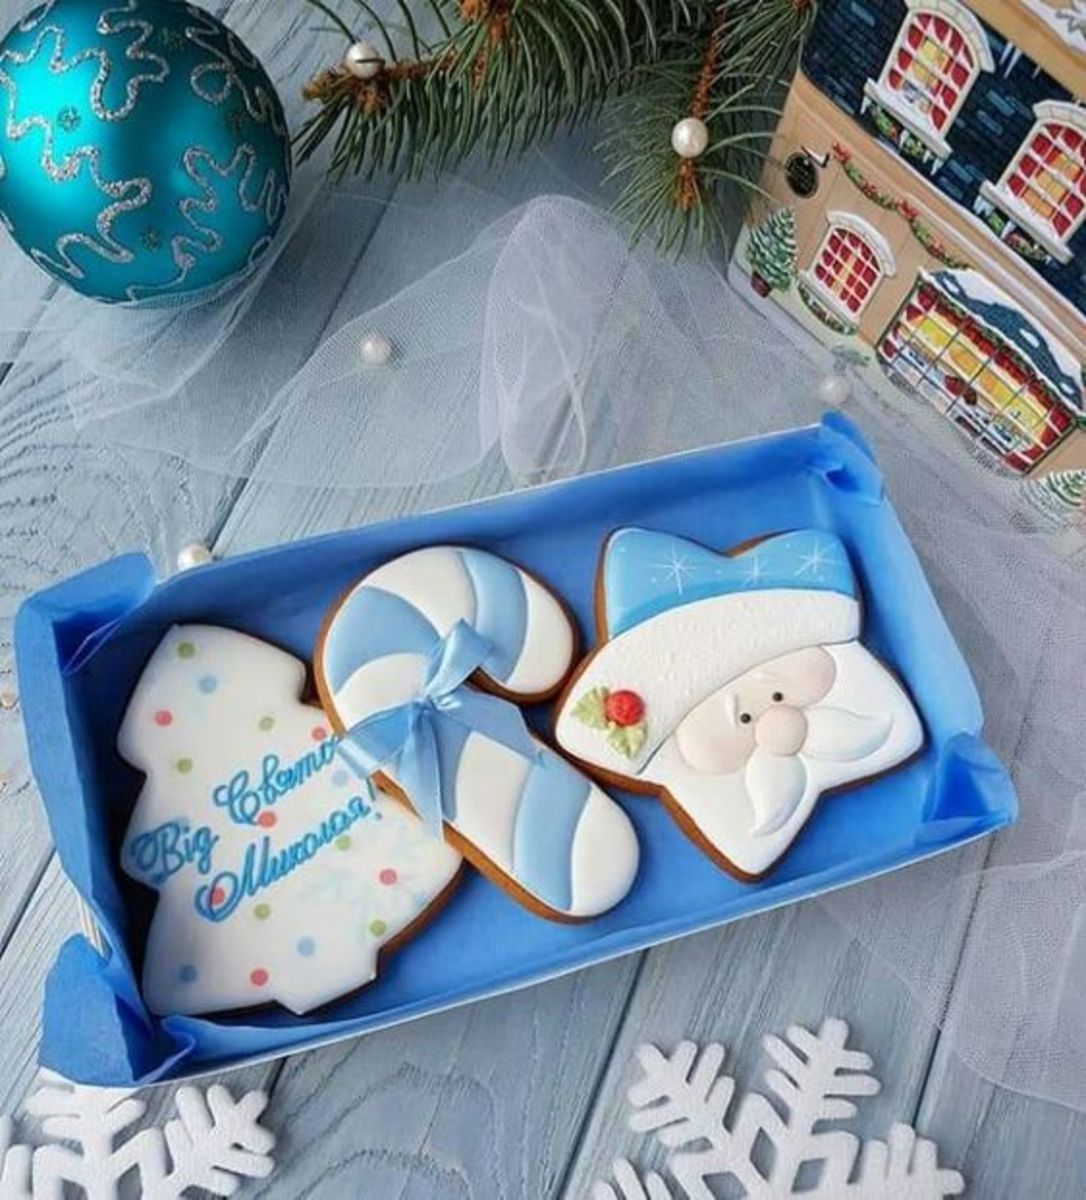 Festive winter cookies